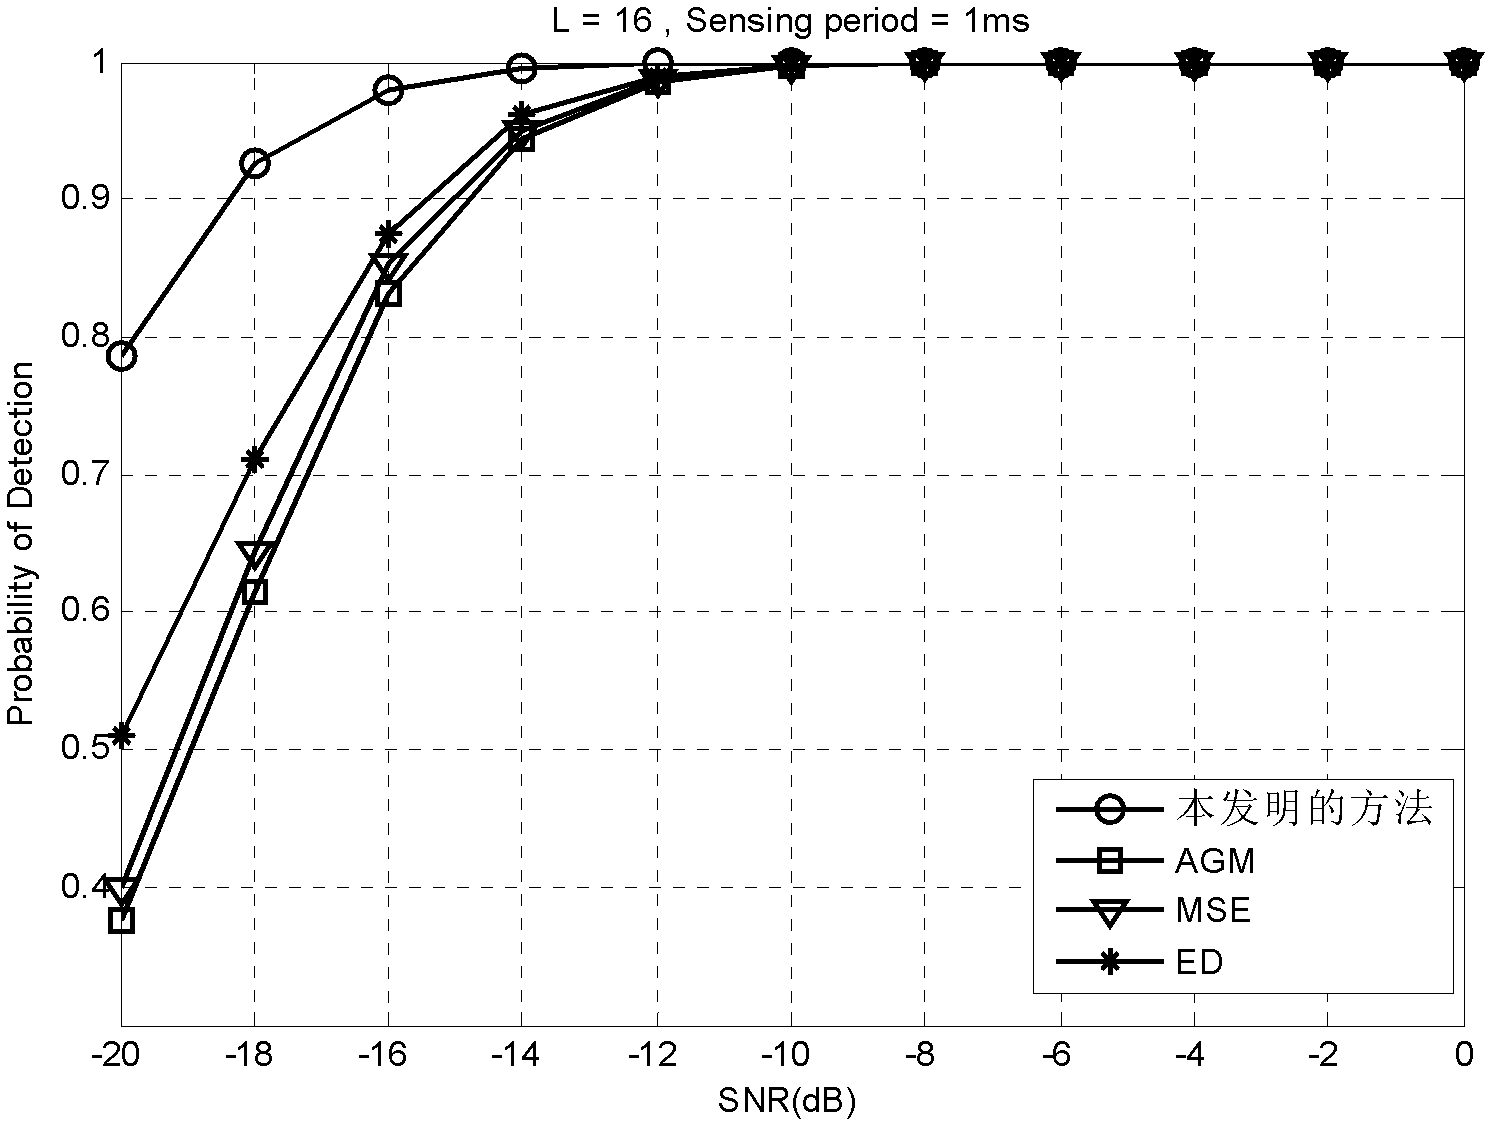 GLRT (General Likelihood Ratio Test) detection method based on oversampling